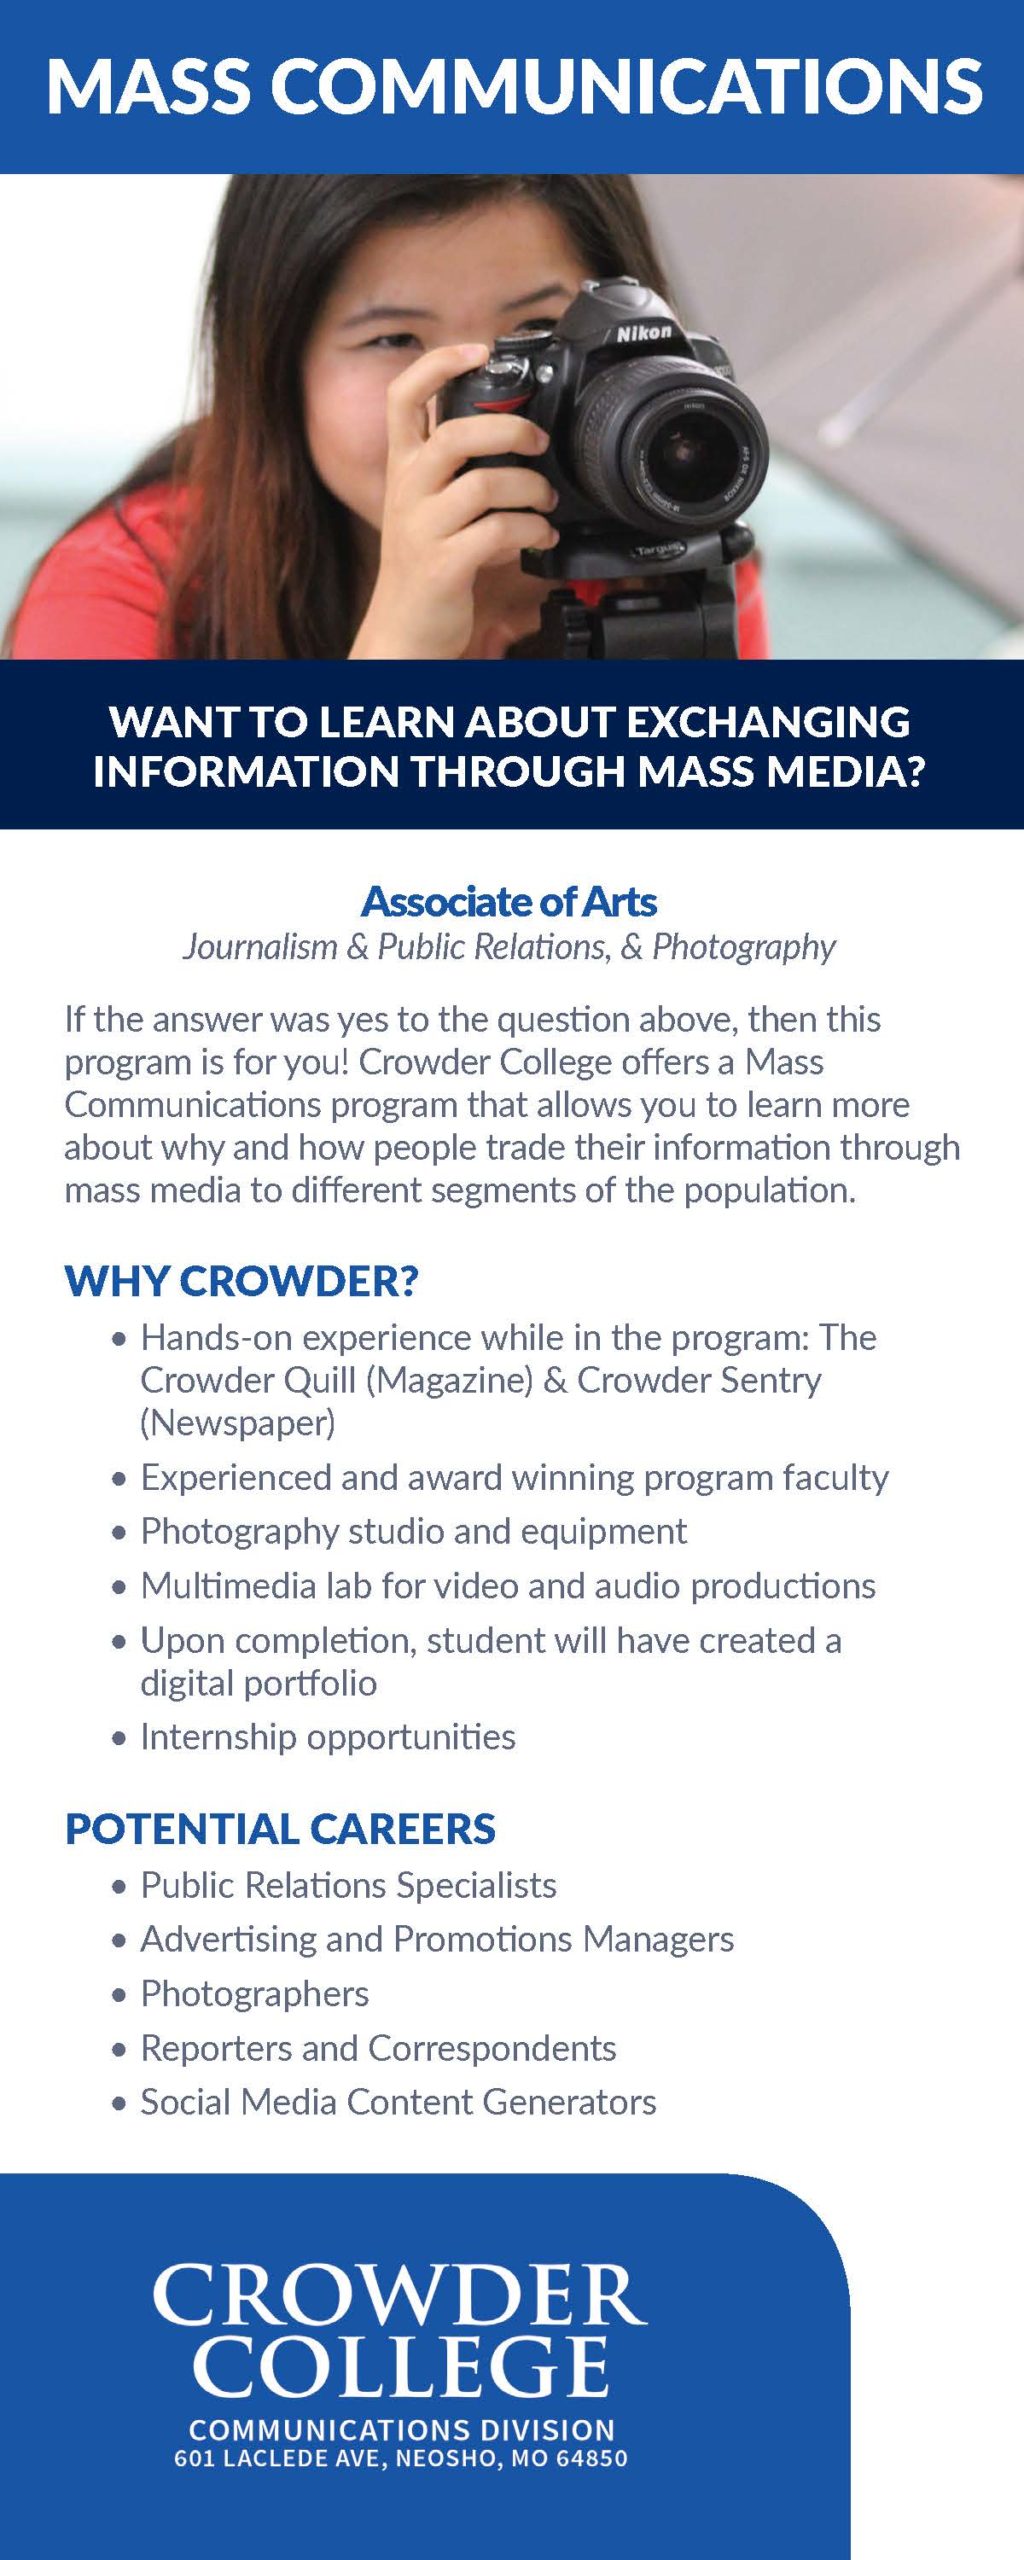 Crowder College Communication degree options information